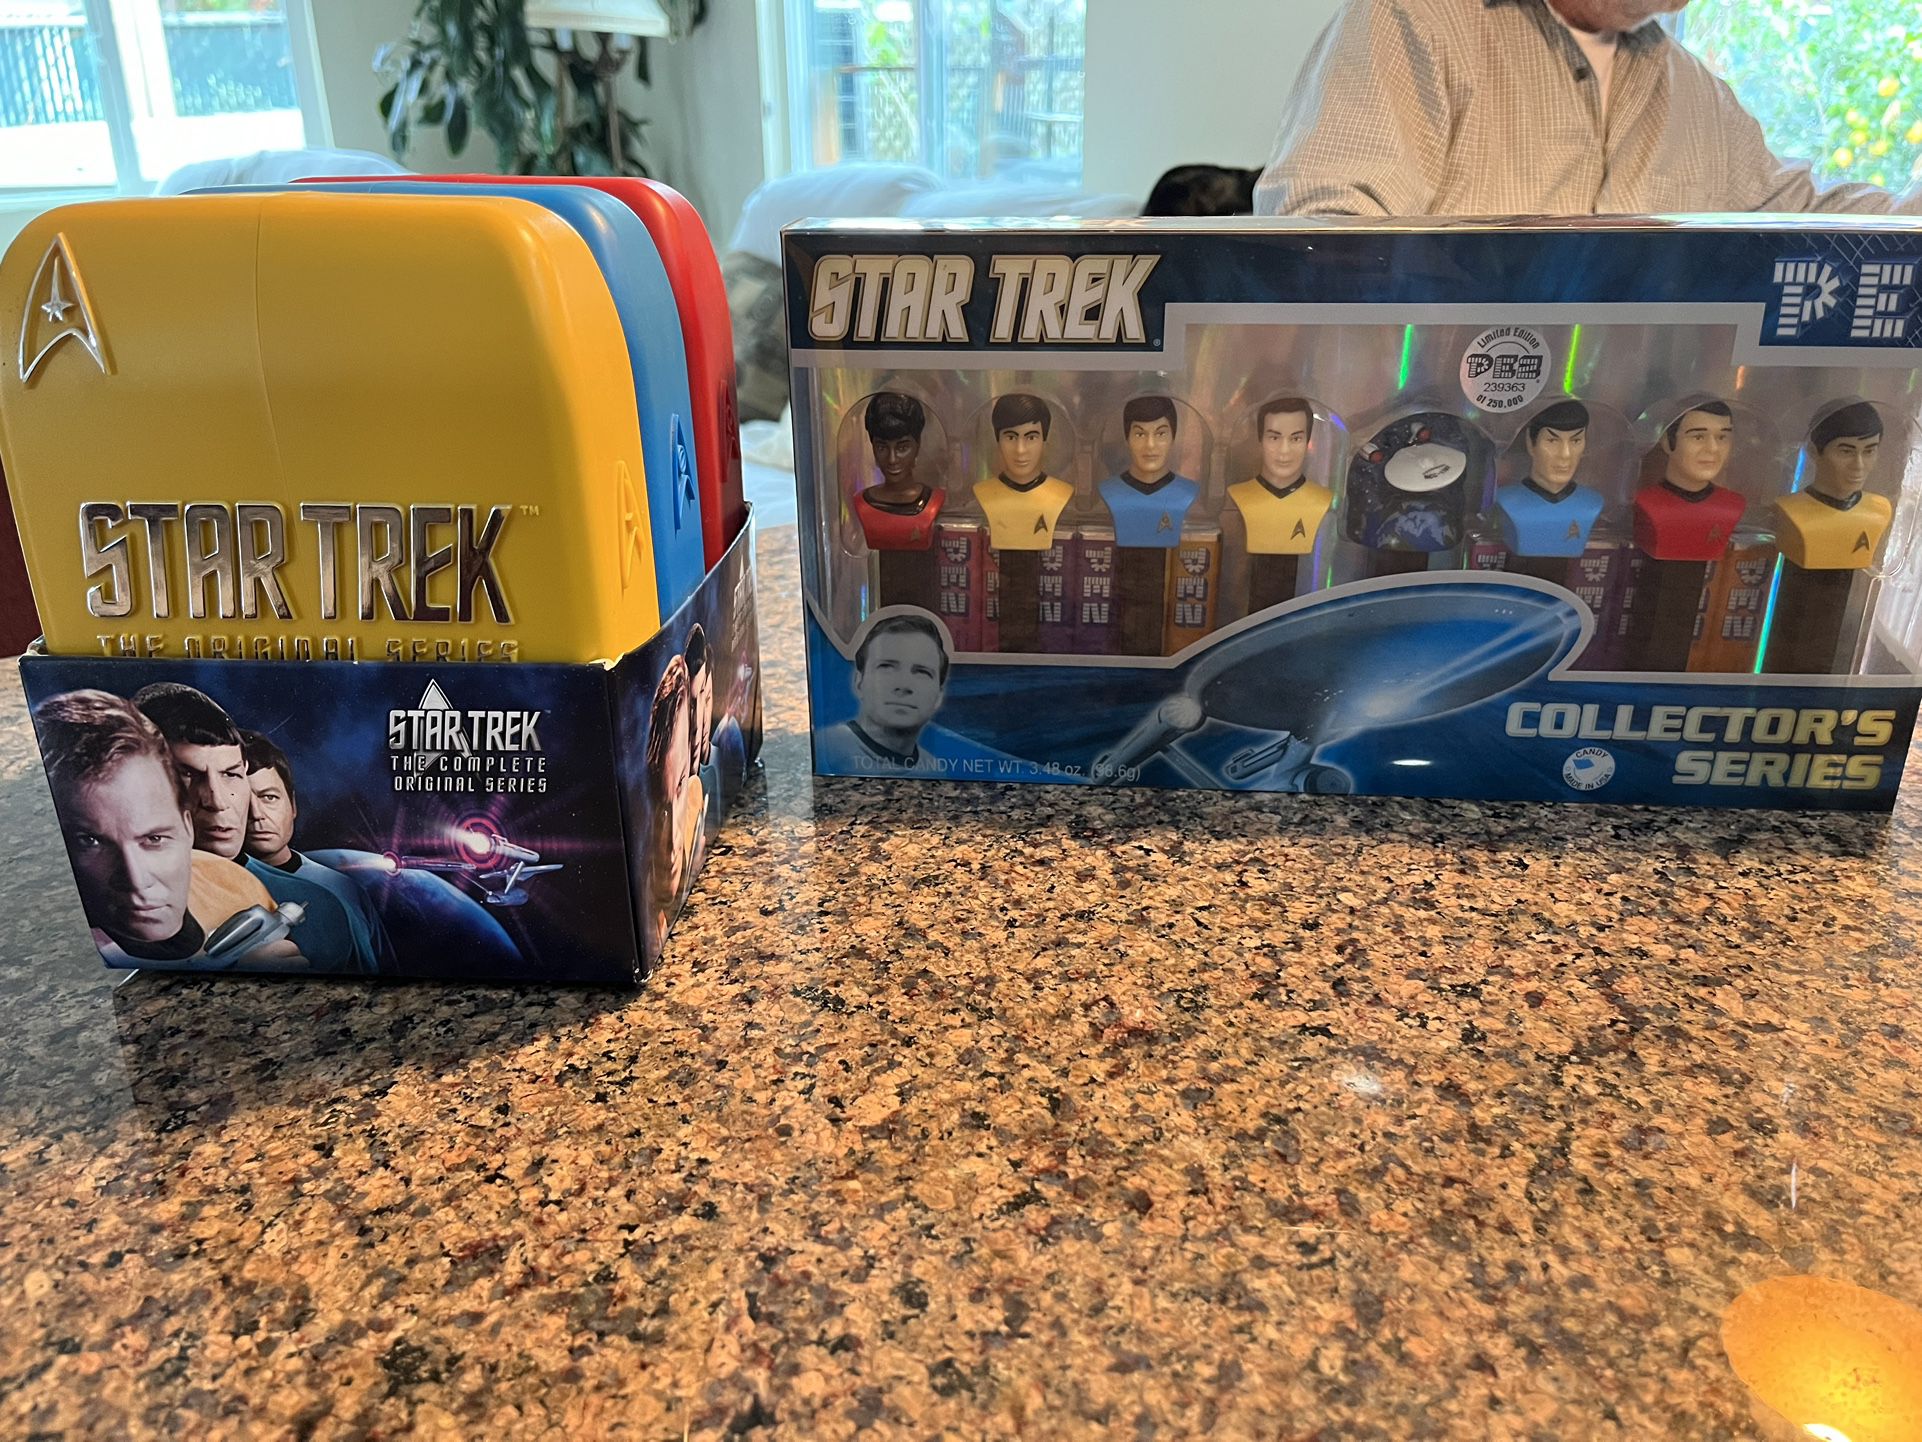 Star Trek Original Series DVD Set